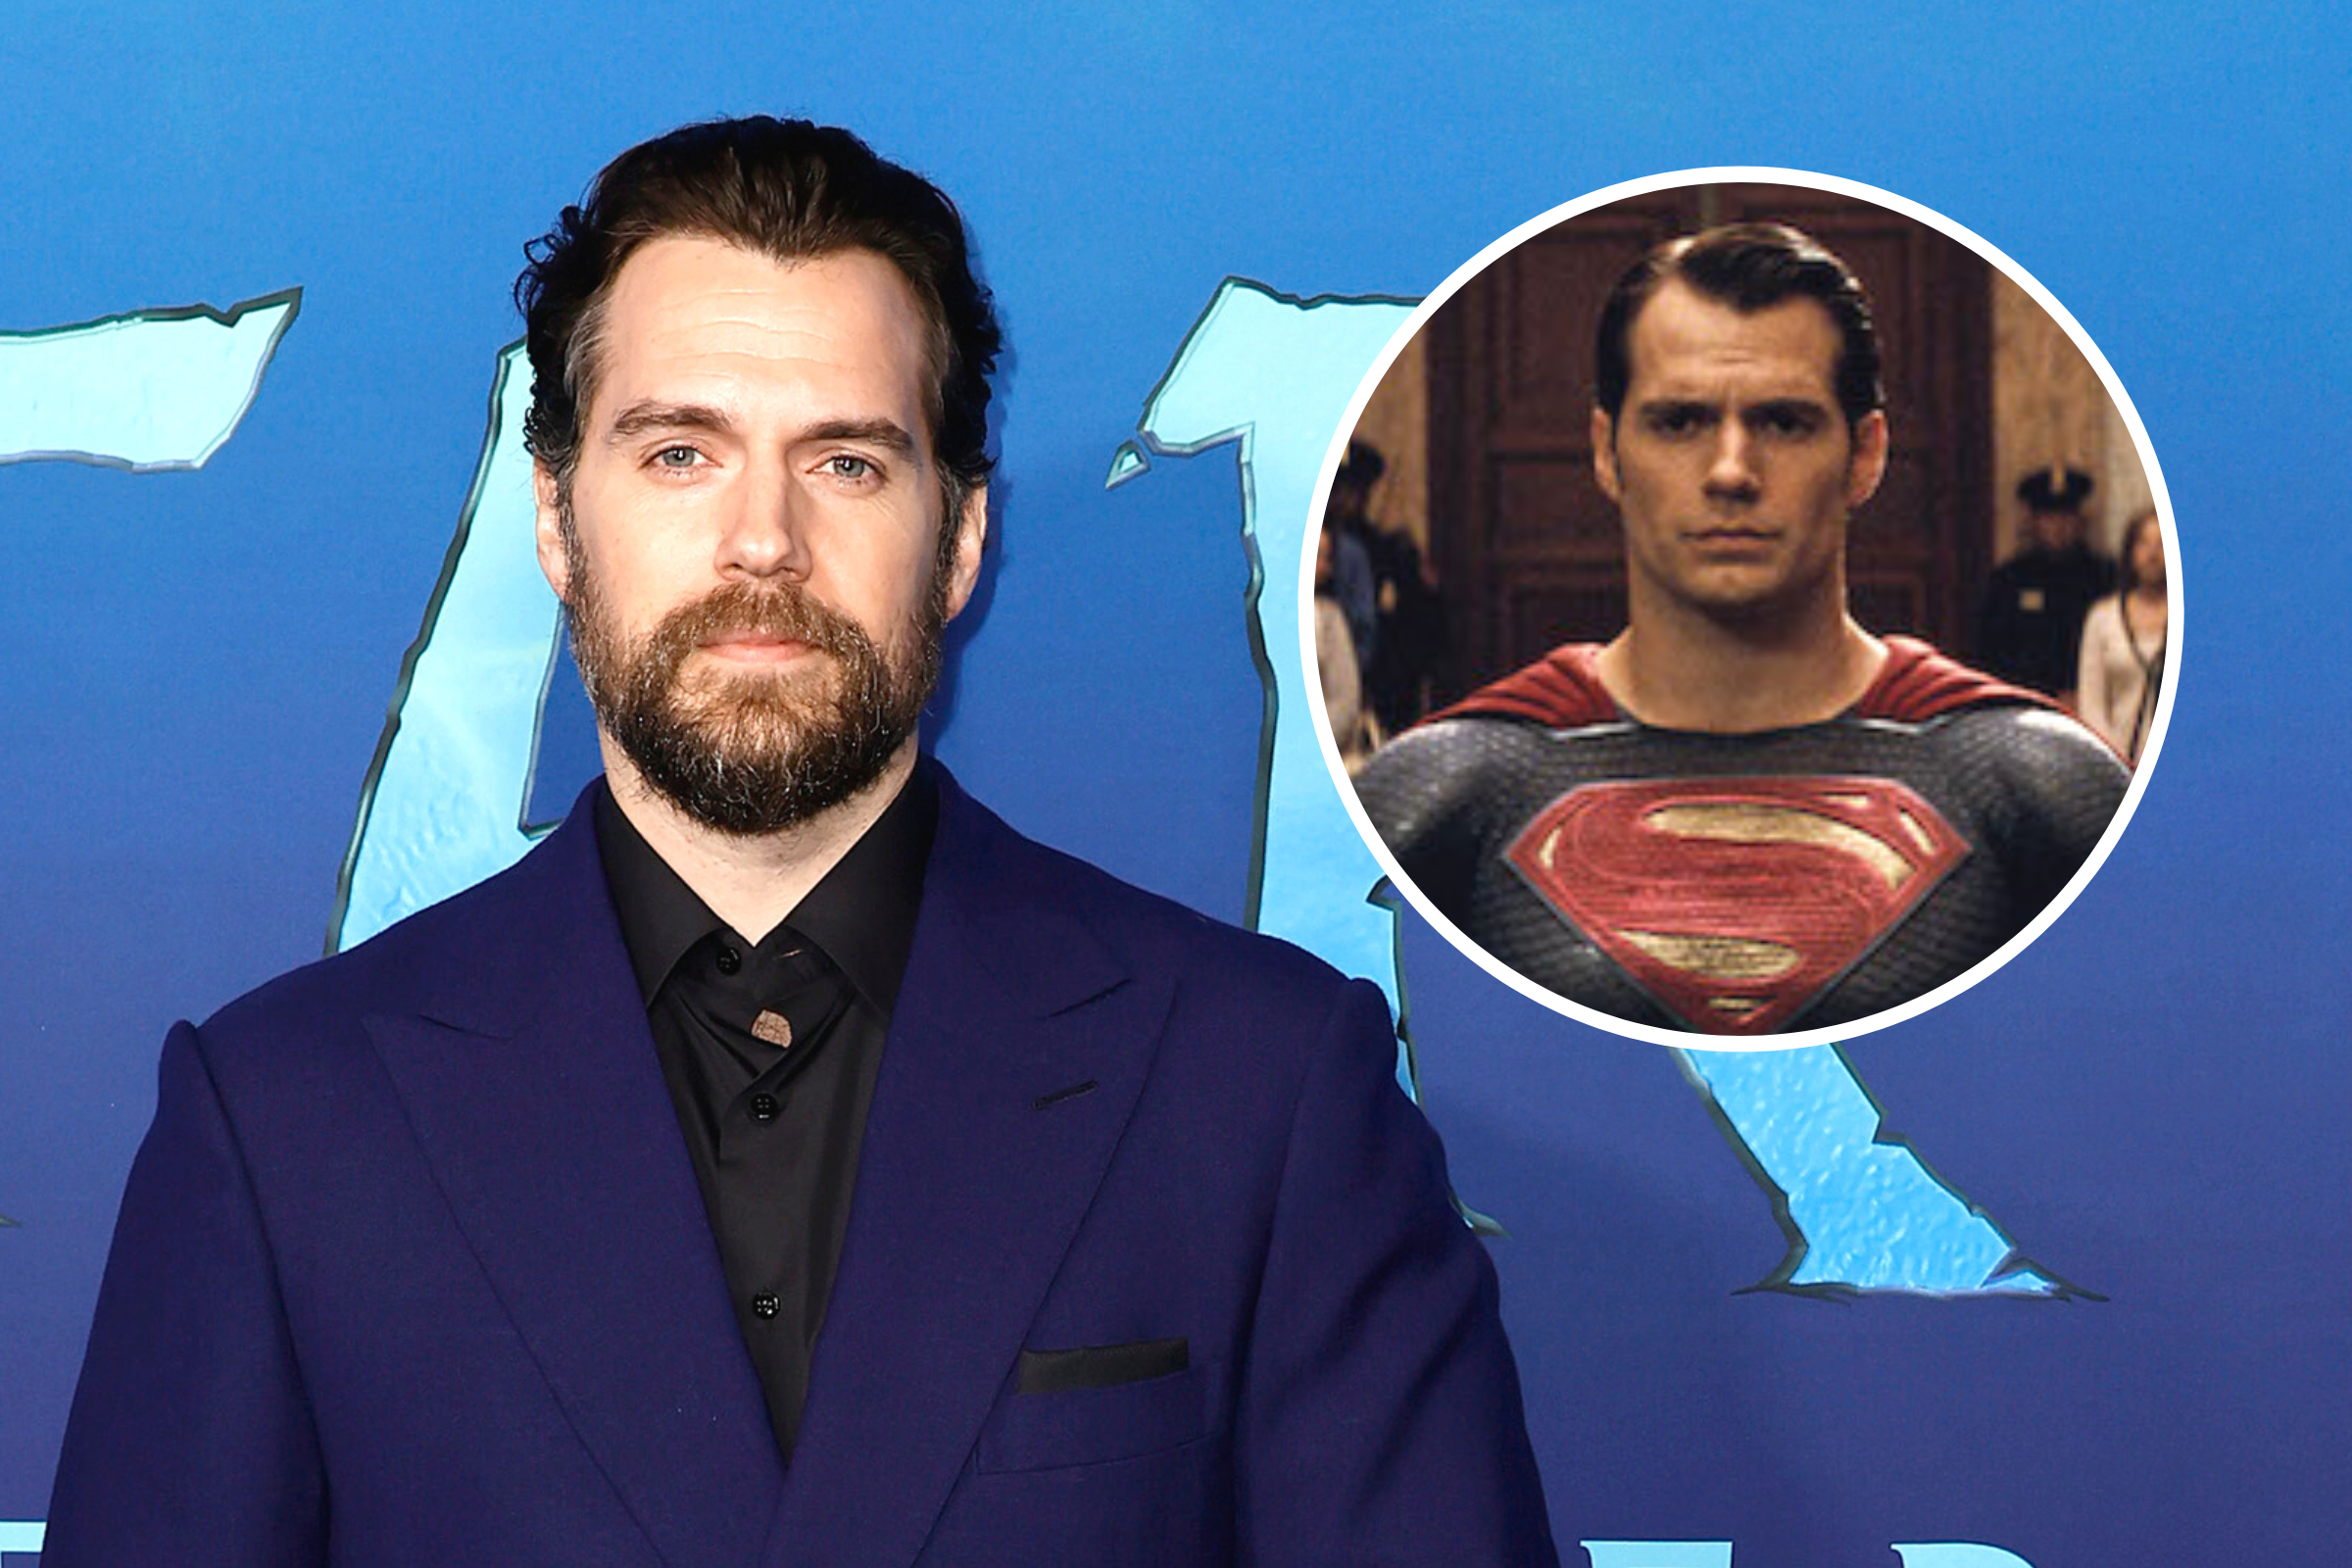 Will Henry Cavill Return as Superman? - Superman Homepage